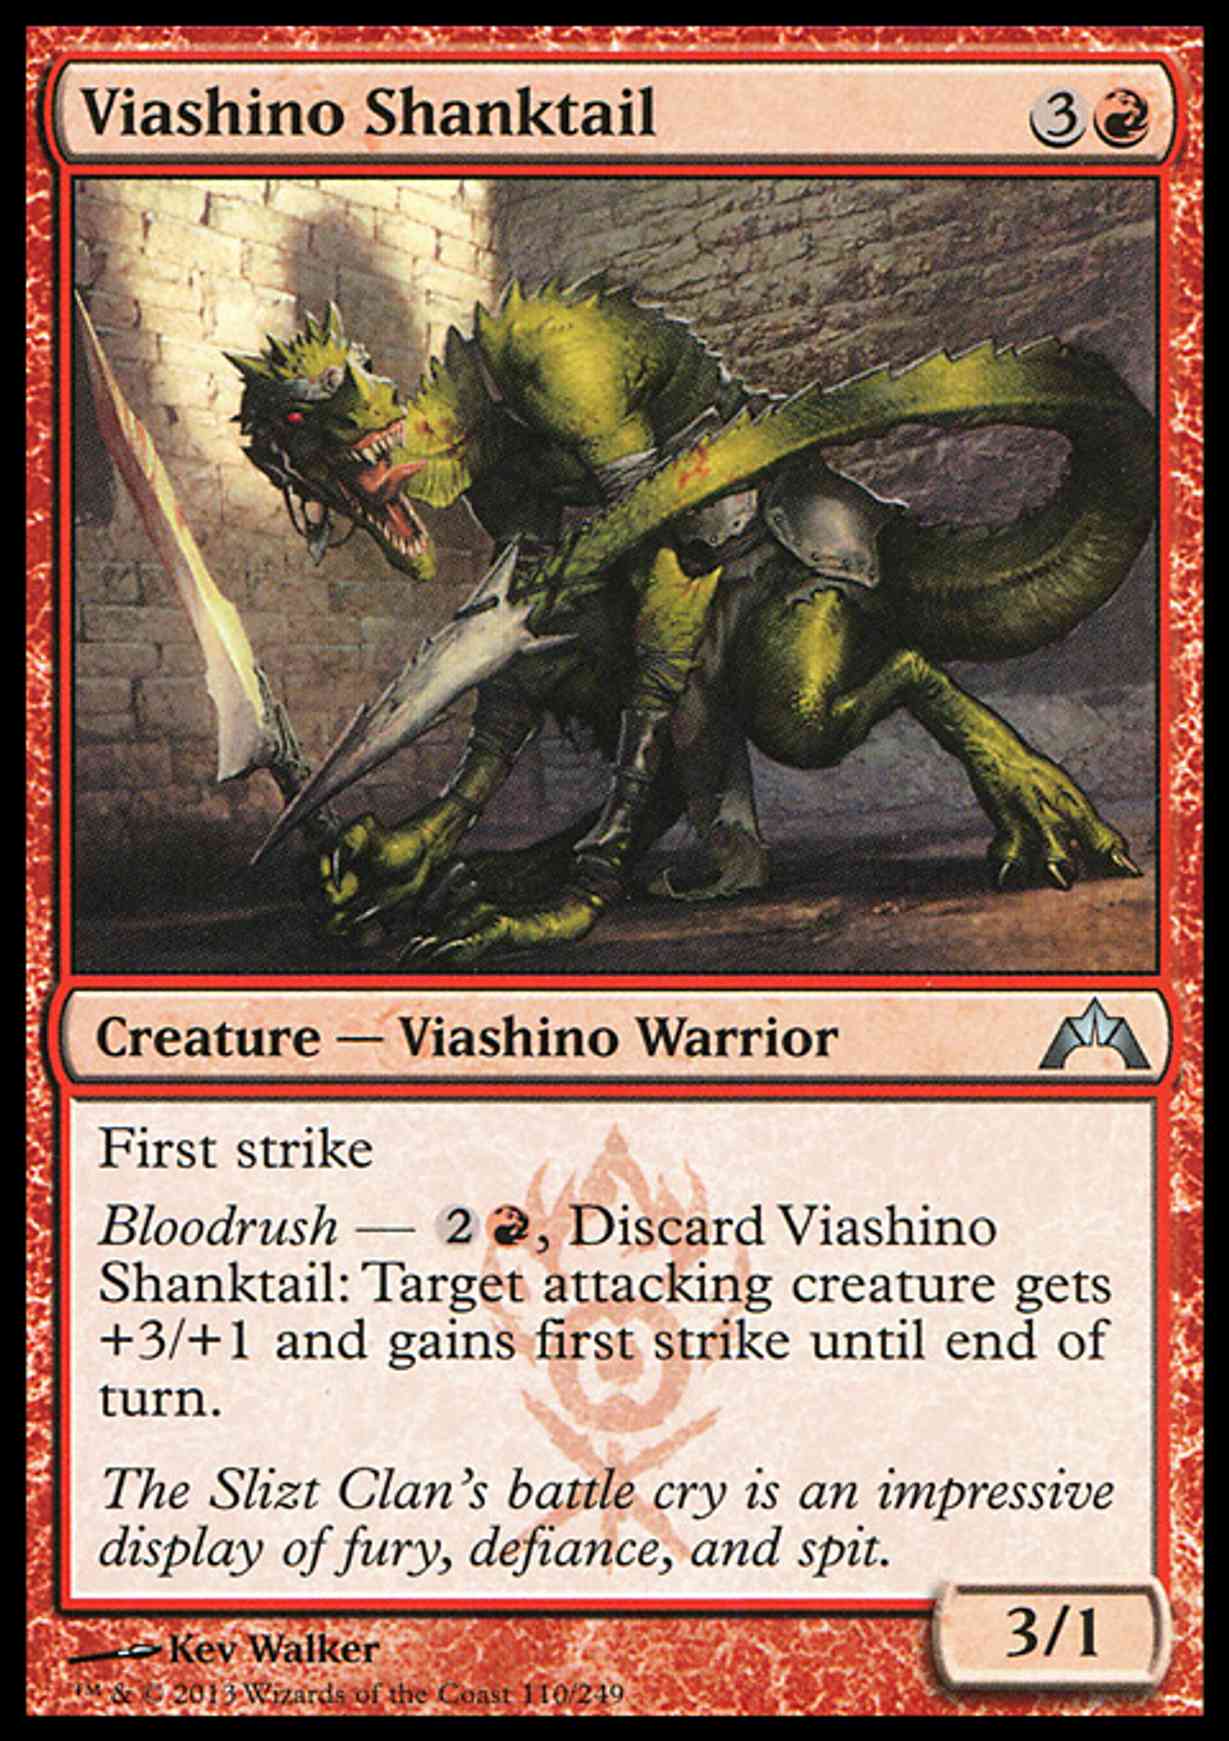 Viashino Shanktail magic card front